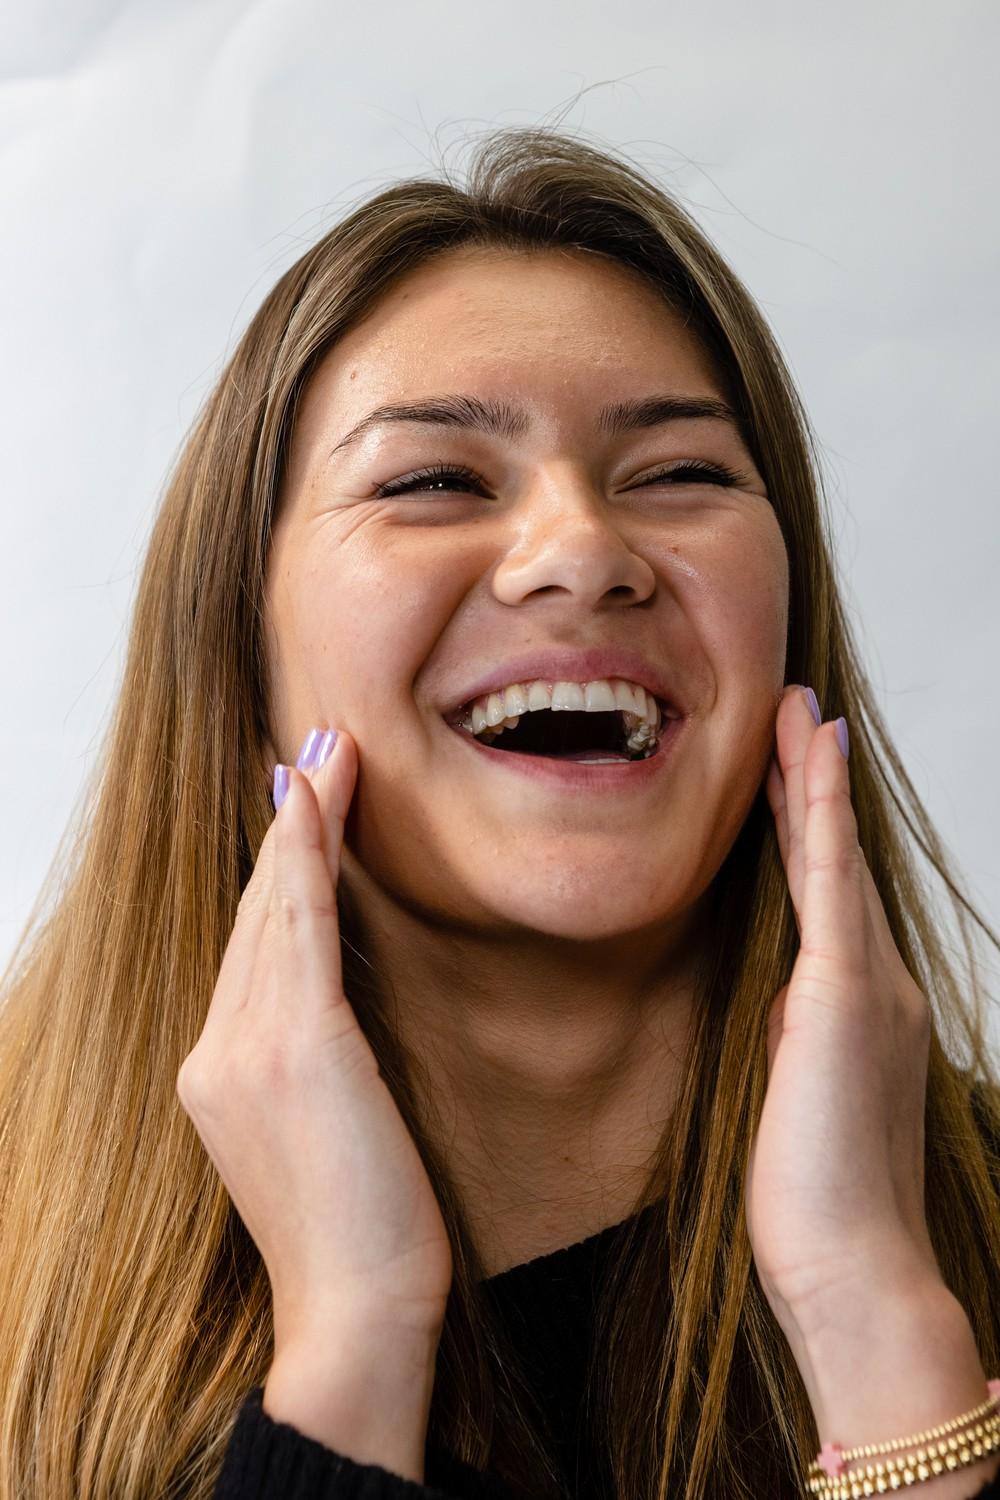 Lily Vu laughs while applying Sonya Dakar serum. Vu said the serum is her favorite skin-care product.